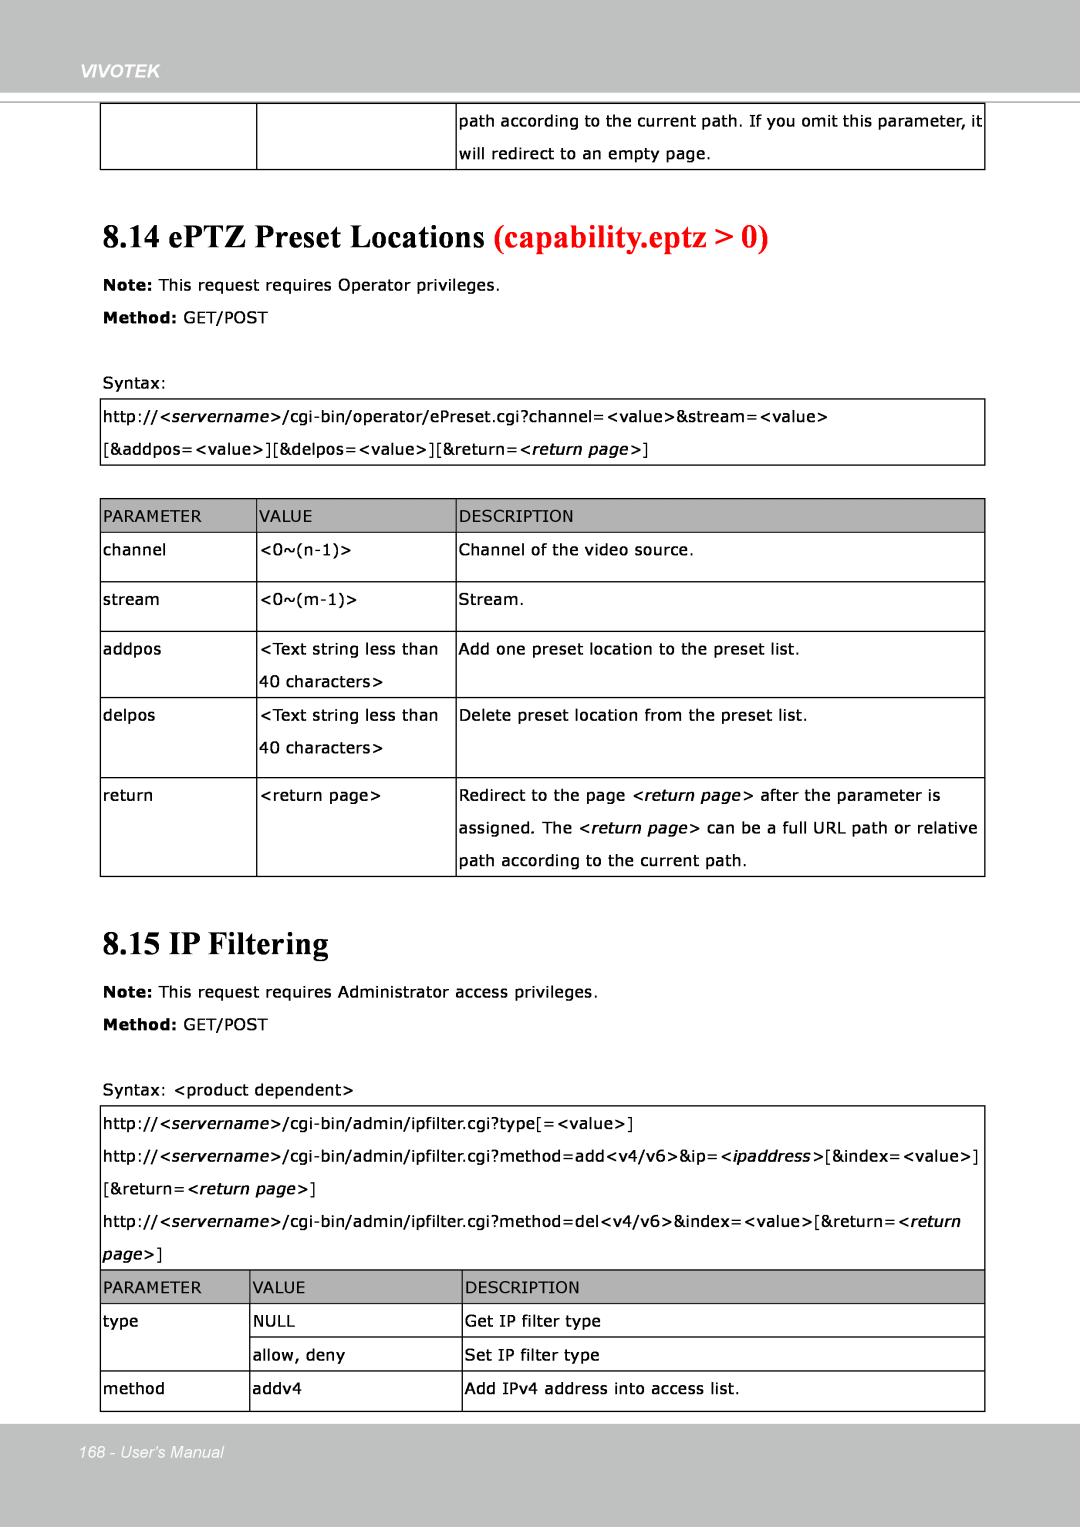 Vivotek IP8352 manual ePTZ Preset Locations capability.eptz, IP Filtering, Vivotek, Method: GET/POST, Users Manual 